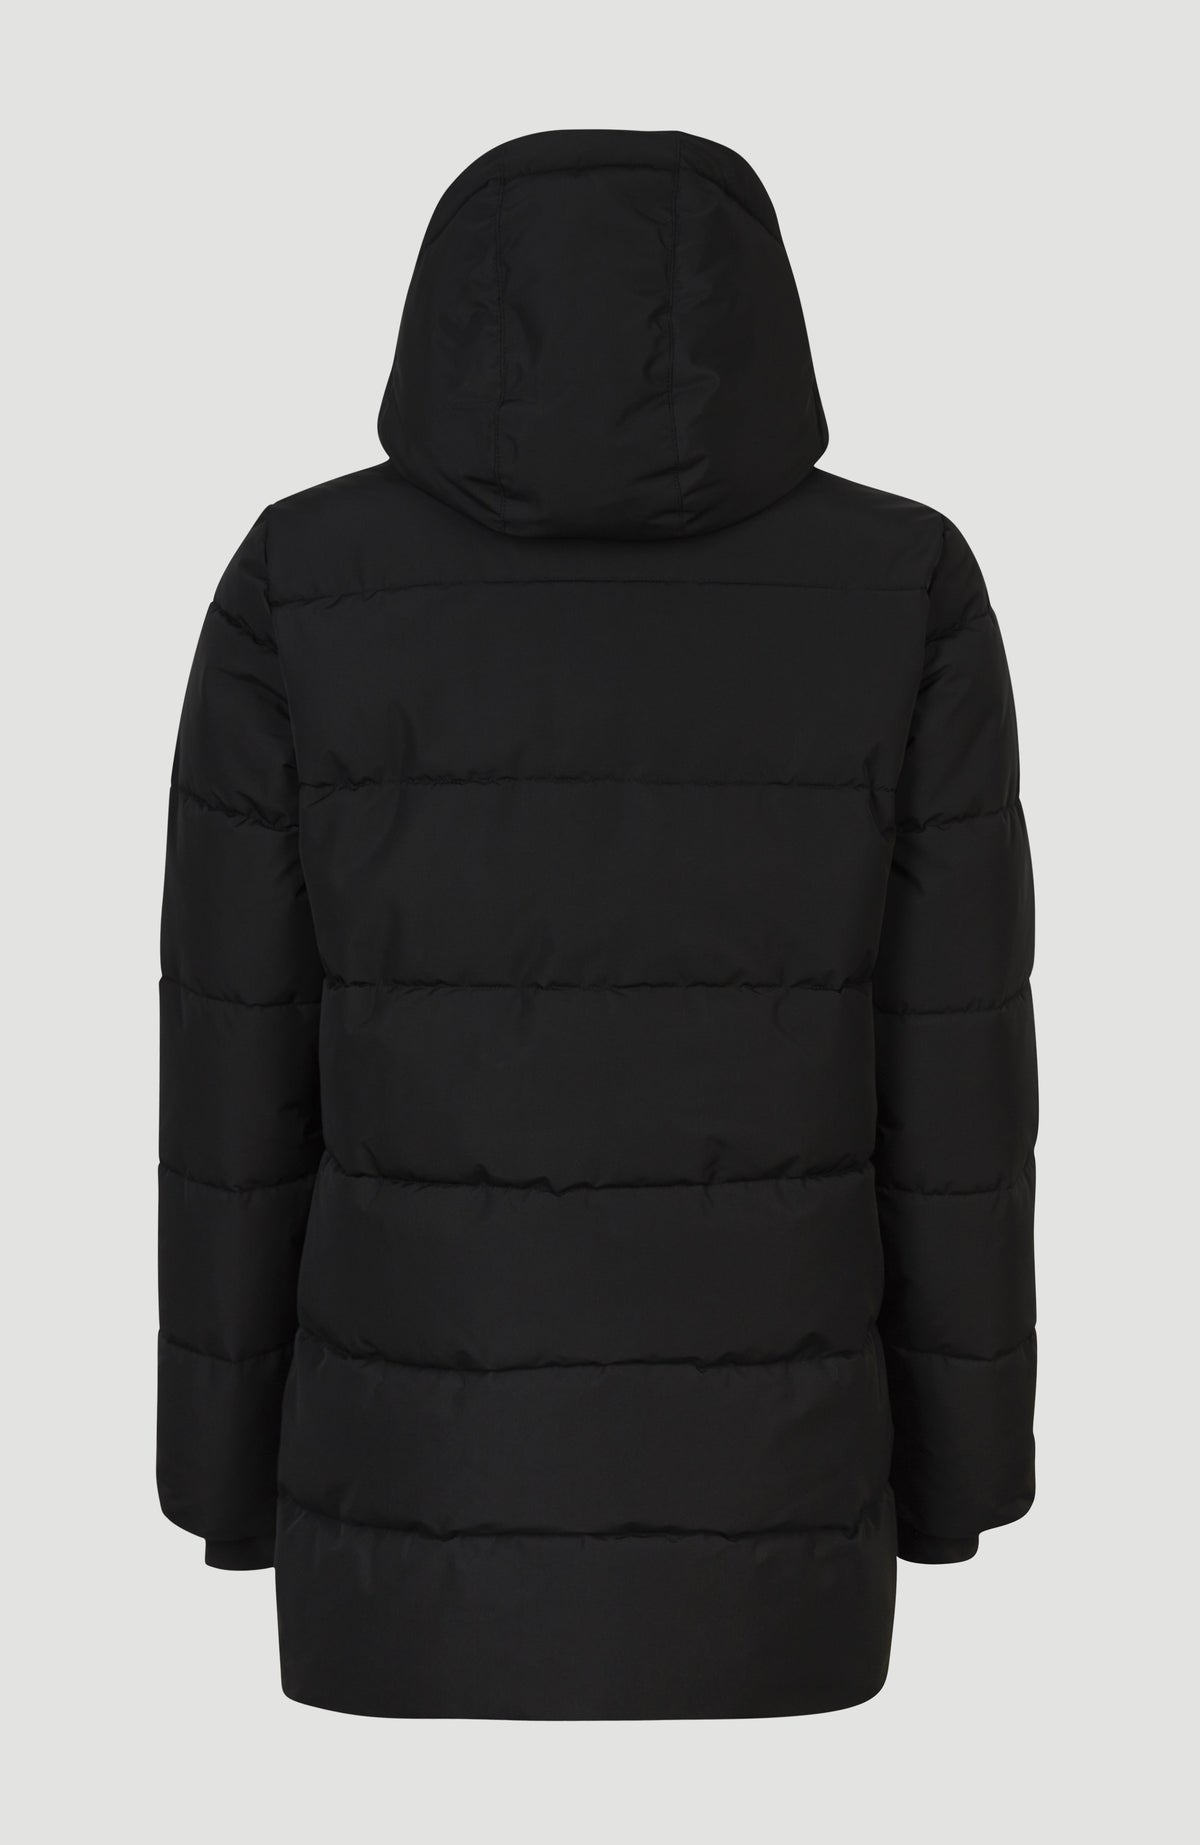 Esprit Outerwear Men’s Black Full Zip Padded Jacket Size XL 